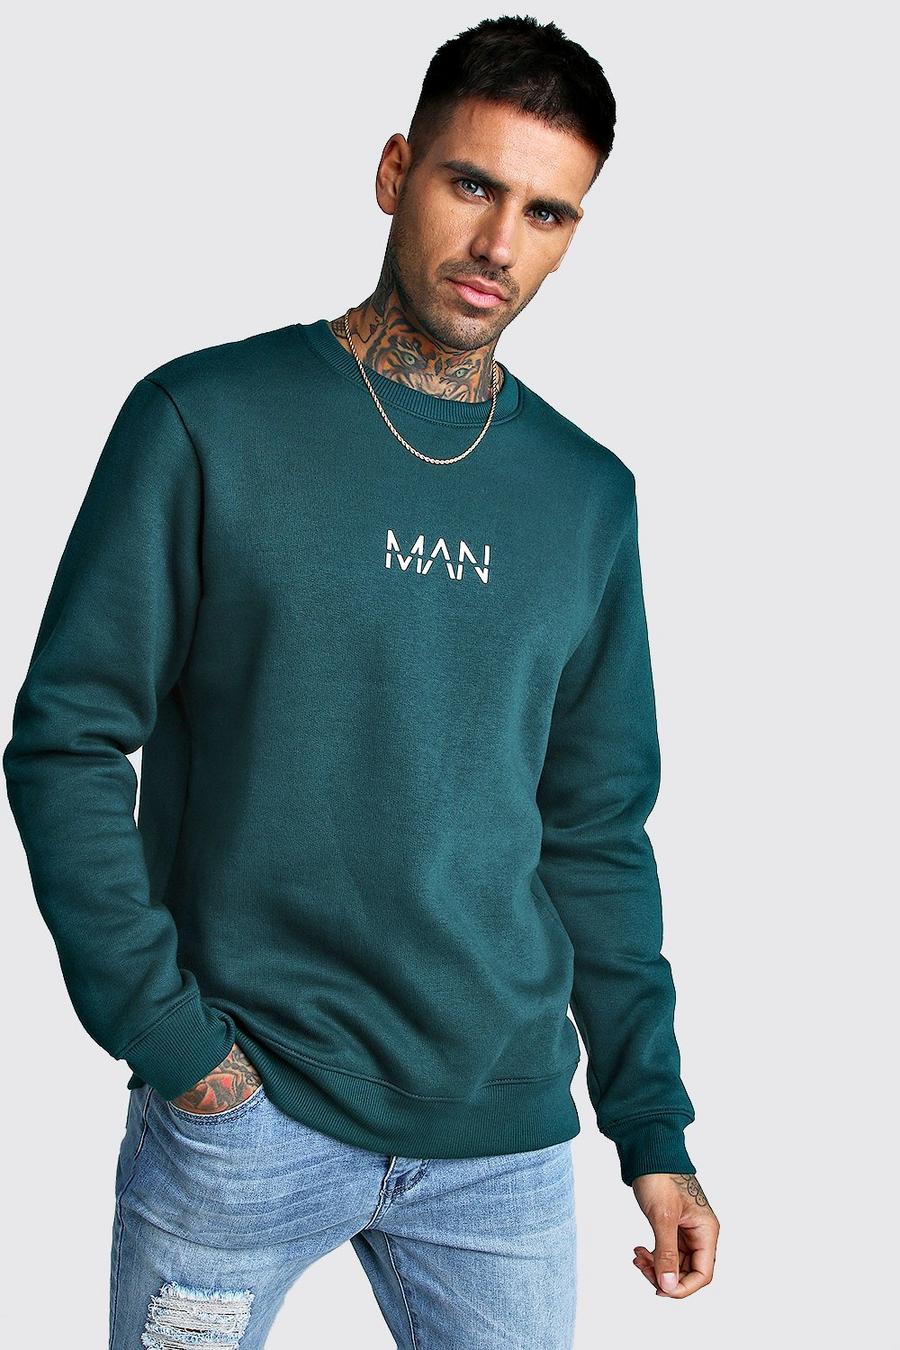 Teal green Original MAN Print Sweater image number 1